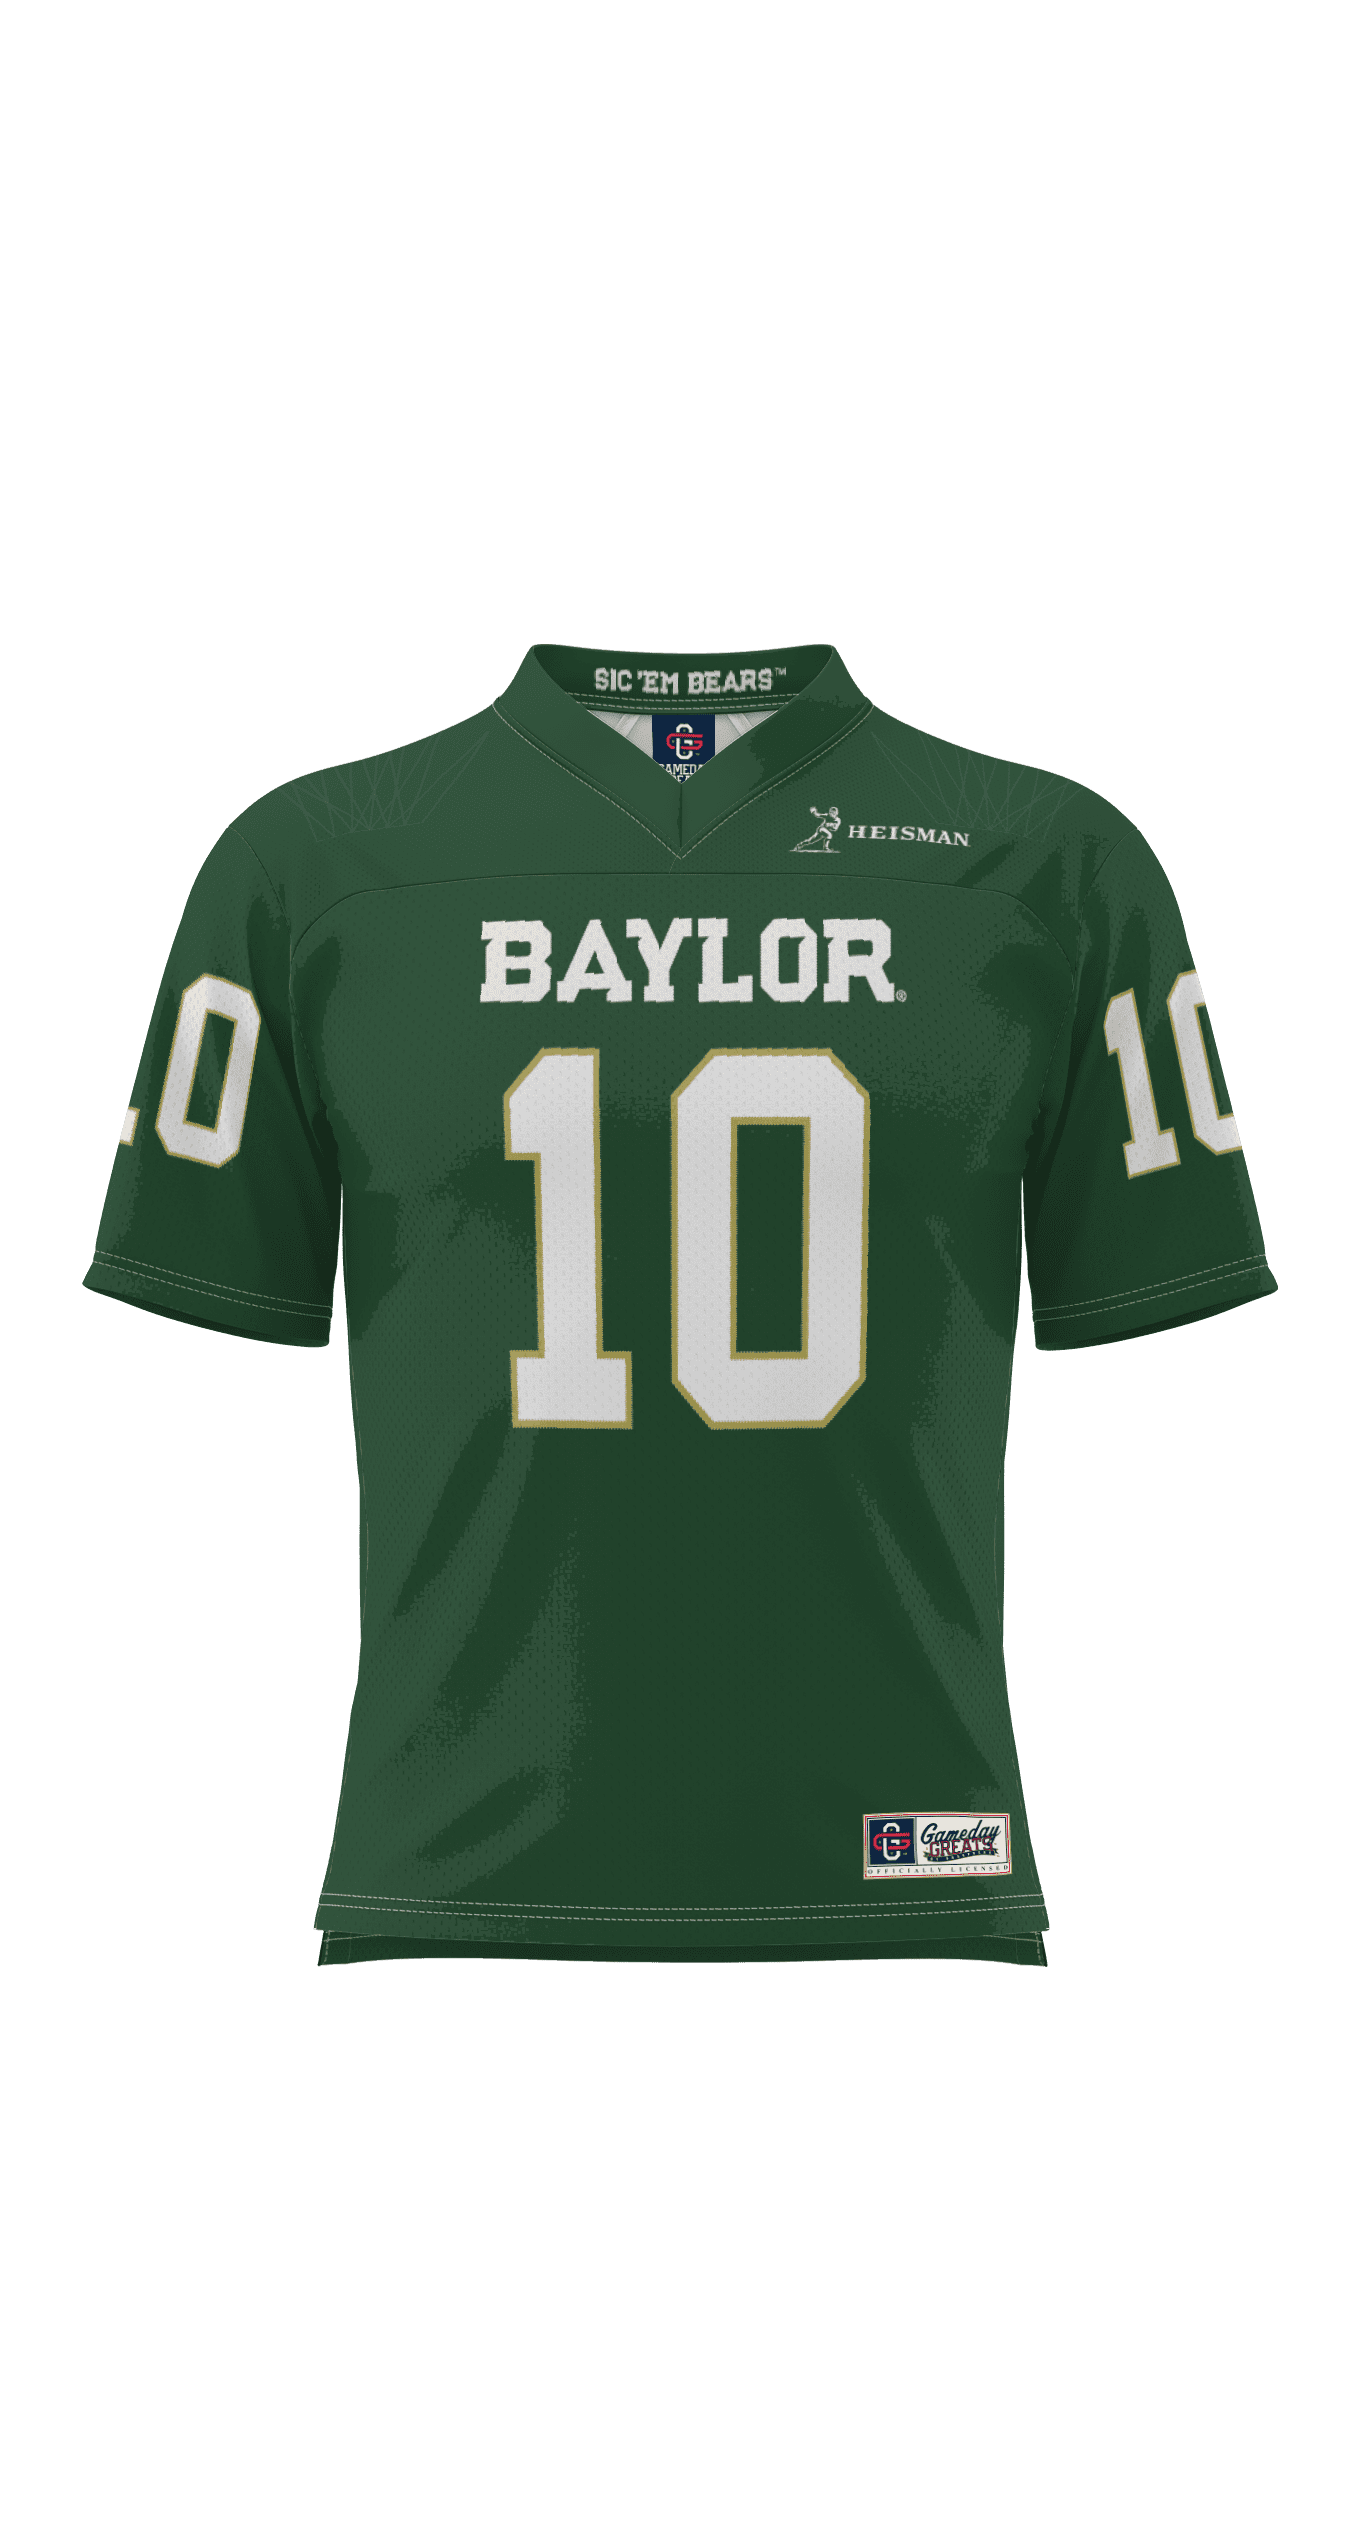 Baylor Bears custom jersey